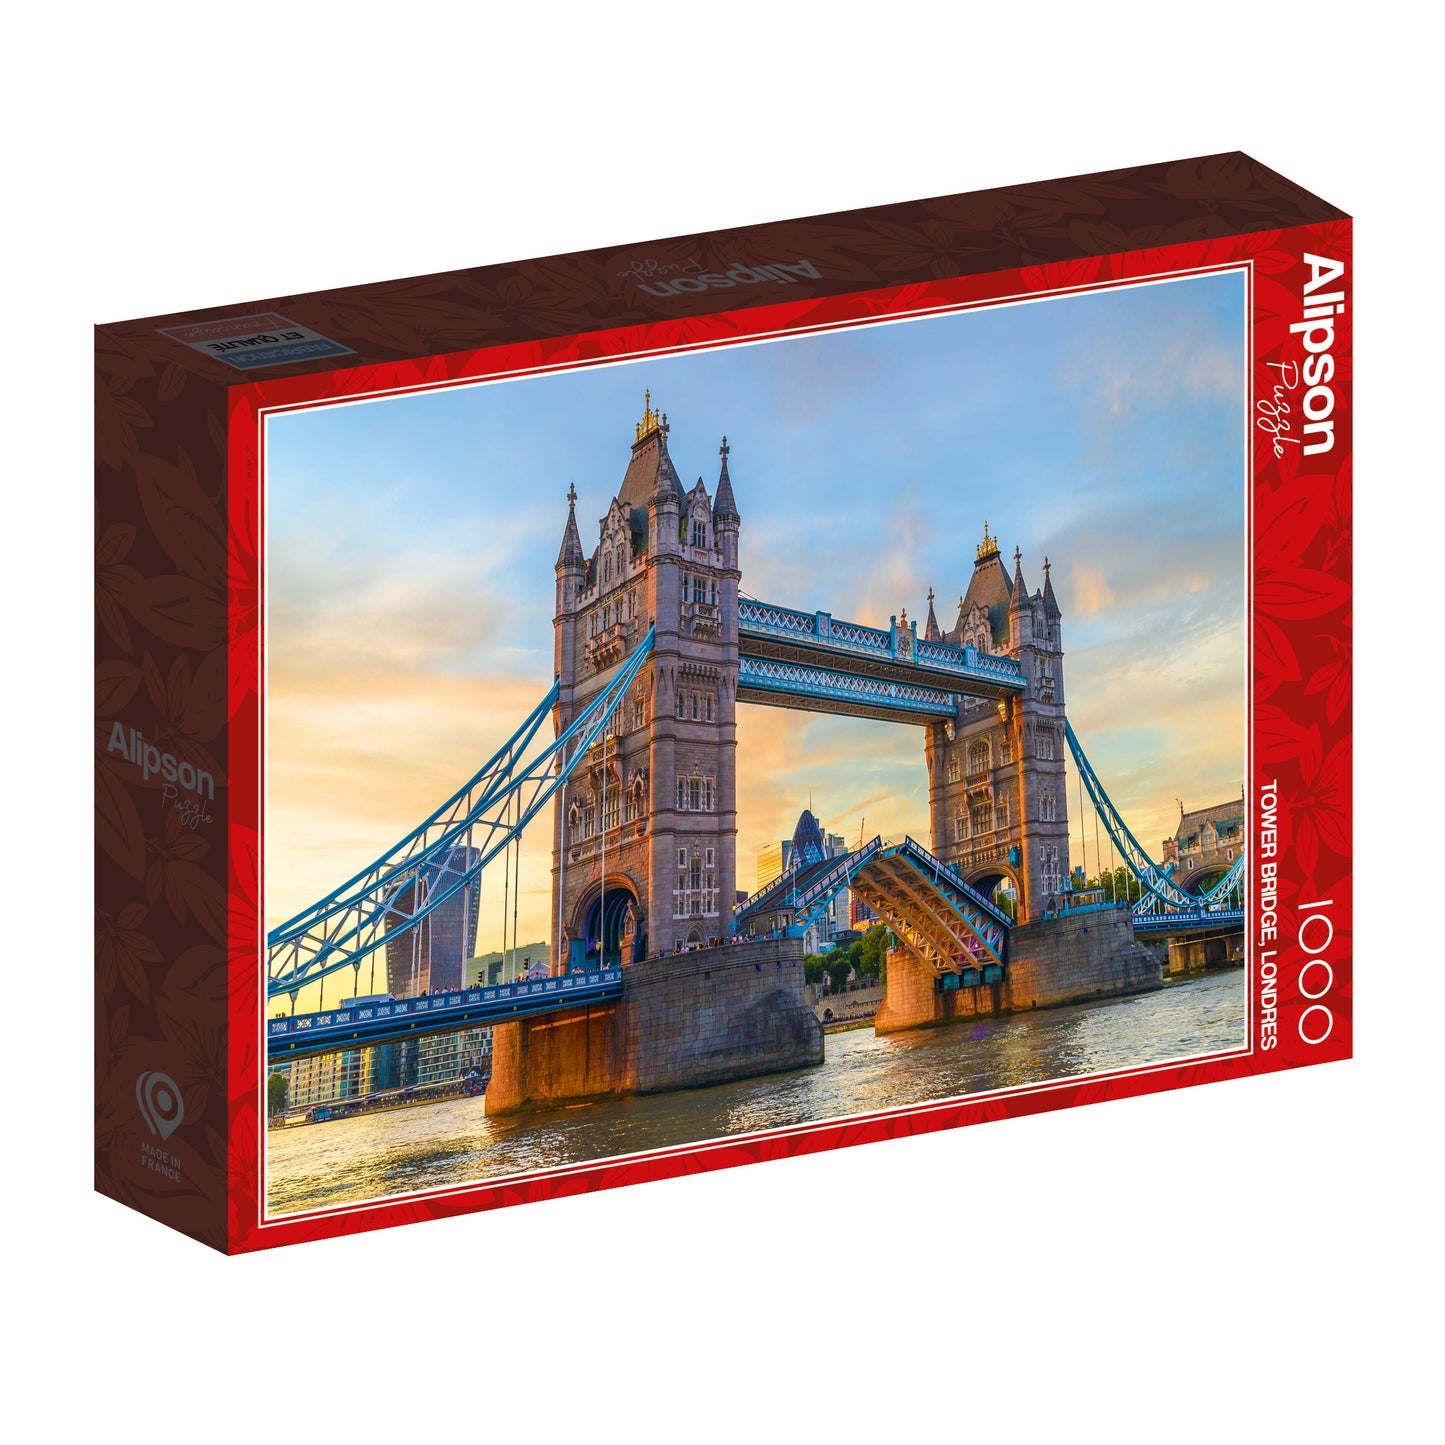 Alipson - Tower Bridge - London - 1000 Piece Jigsaw Puzzle